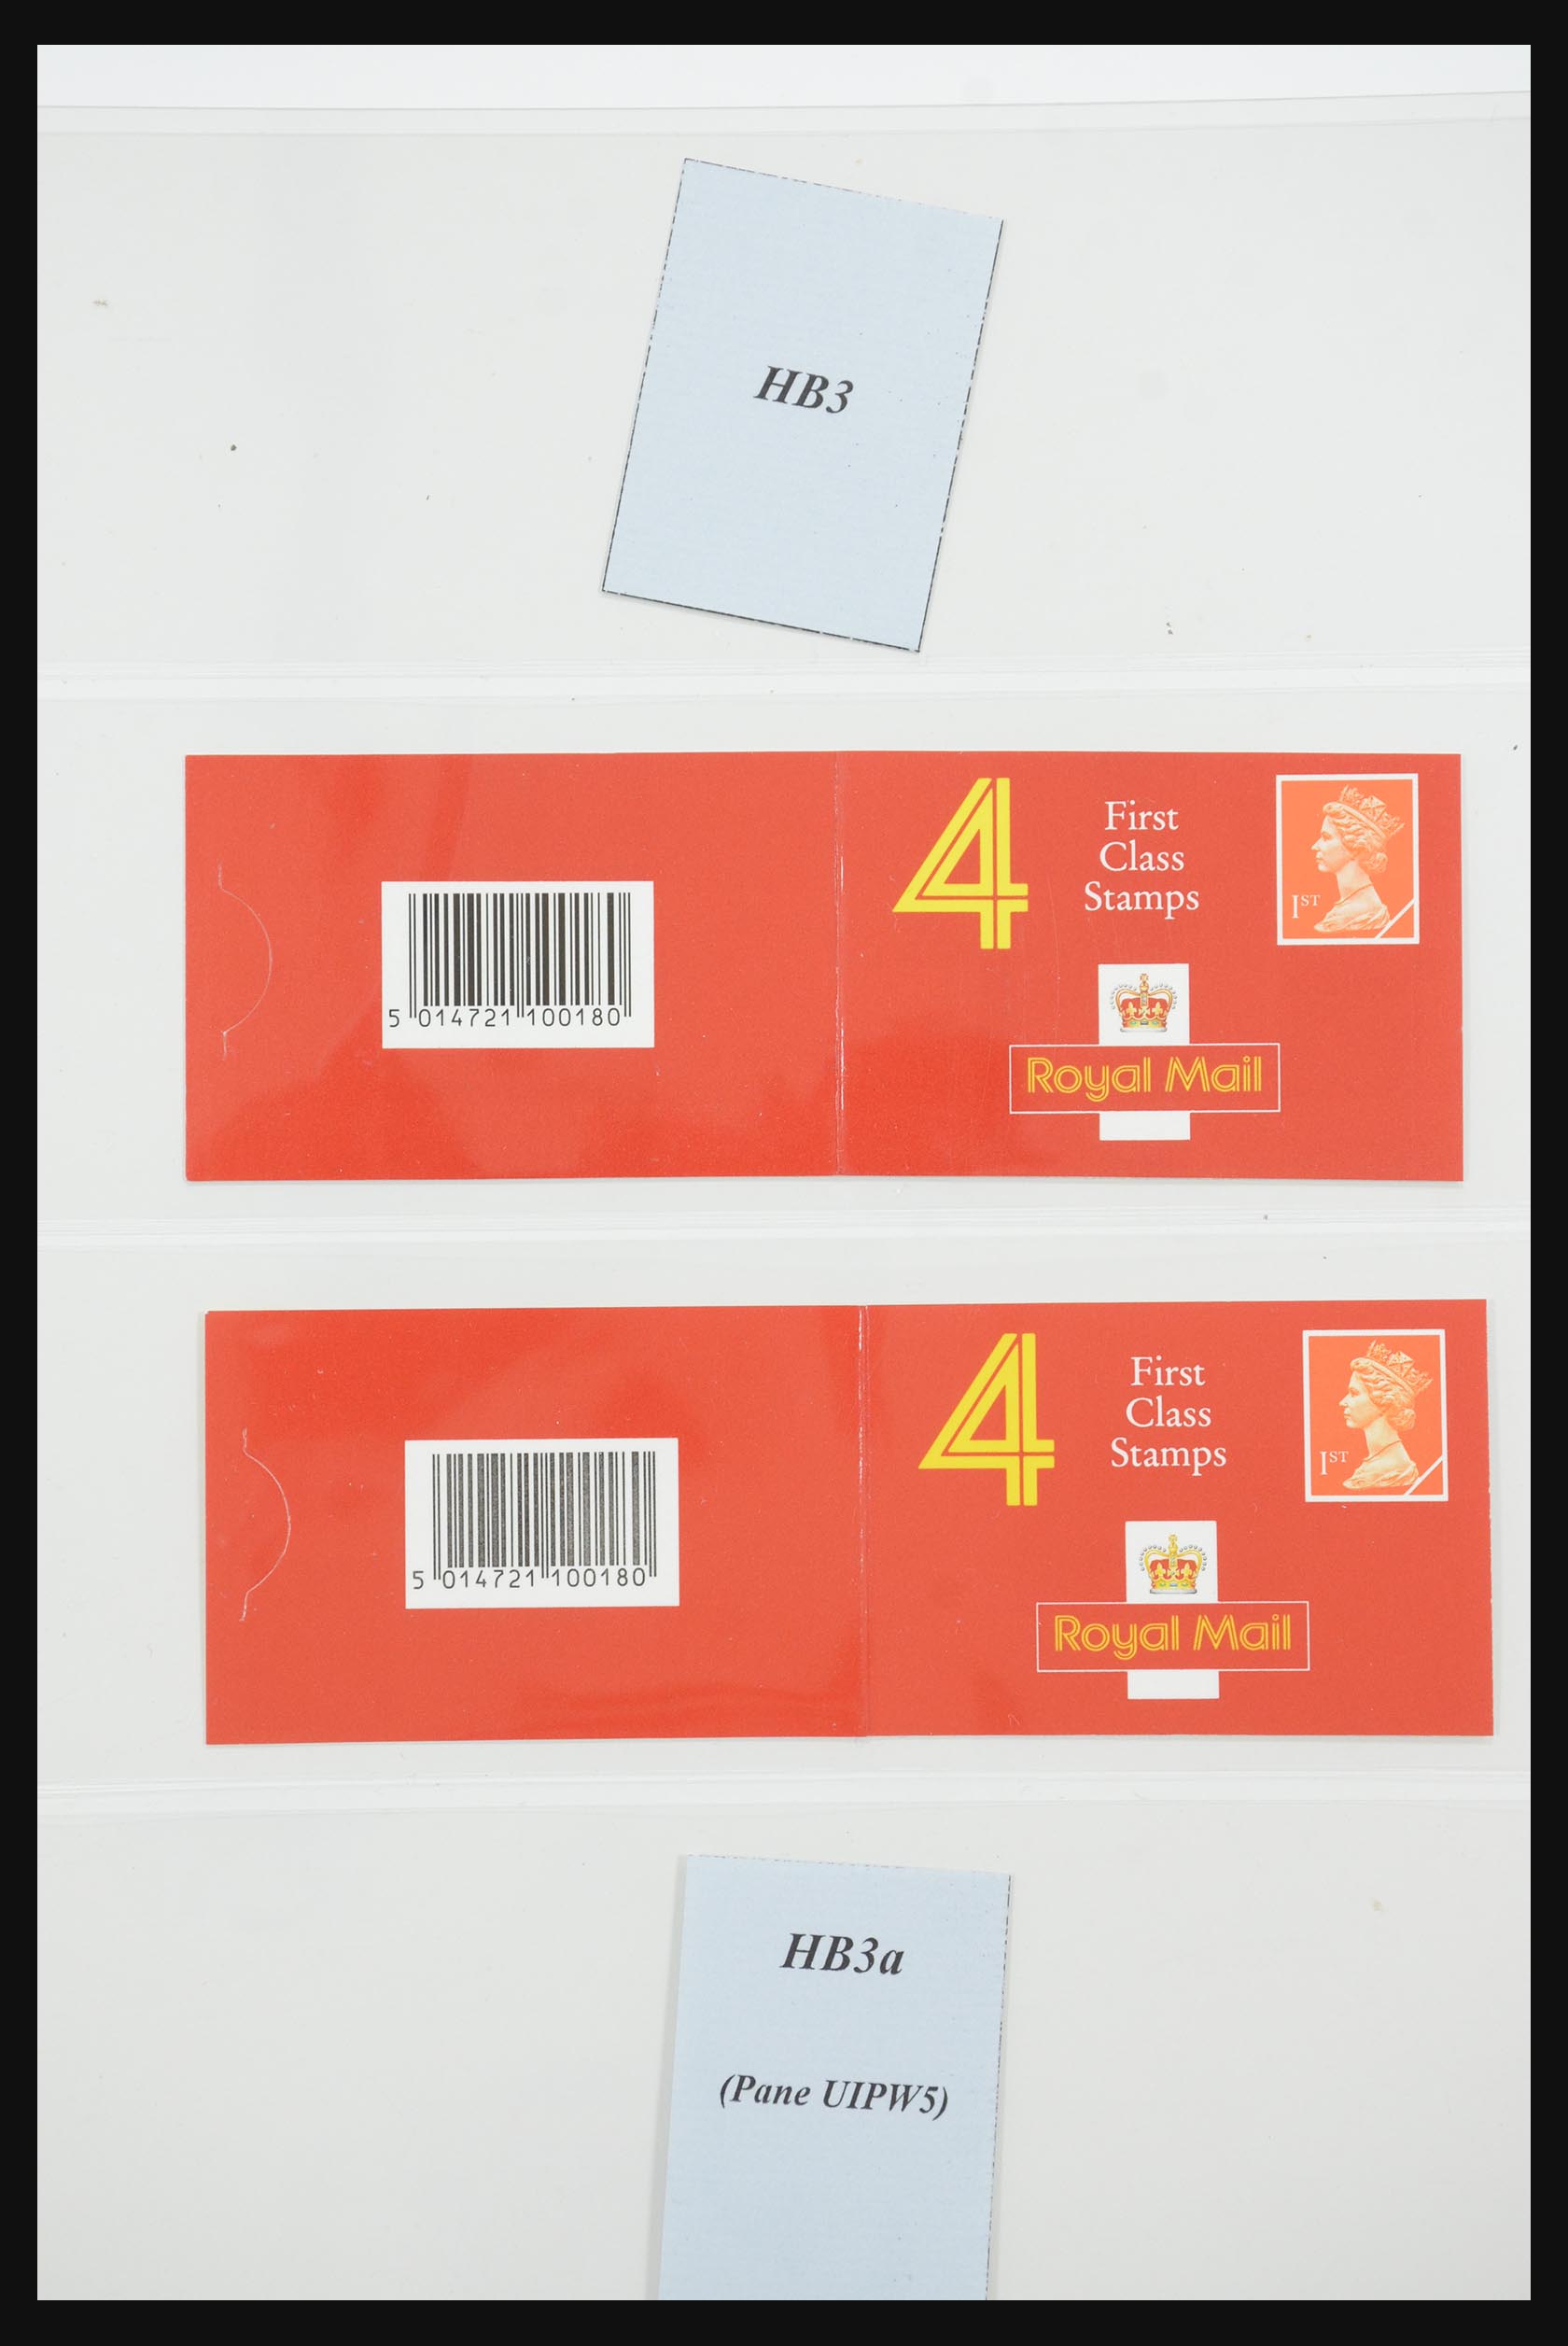 31960 023 - 31960 Great Britain stampbooklets 1989-2000.